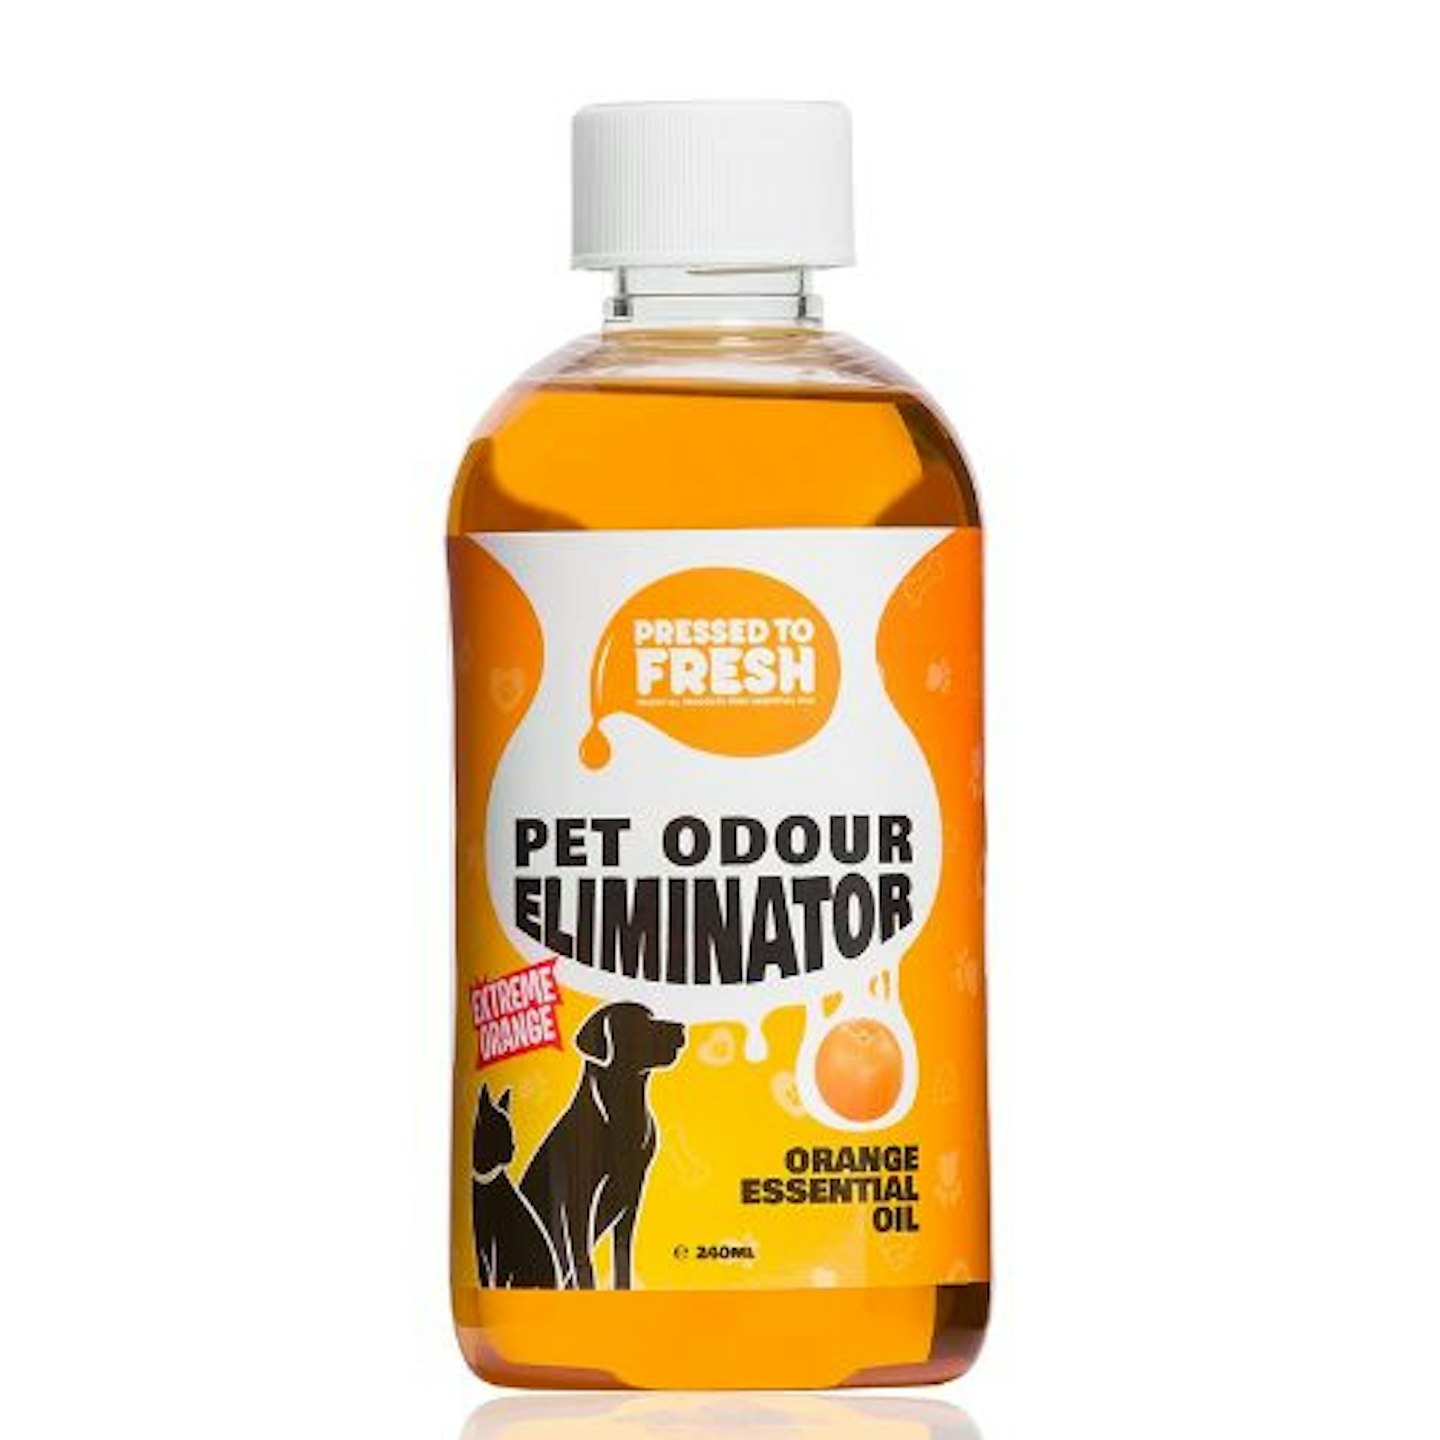 Pressed to Fresh, Pet Urine Odour Eliminator, 240ml